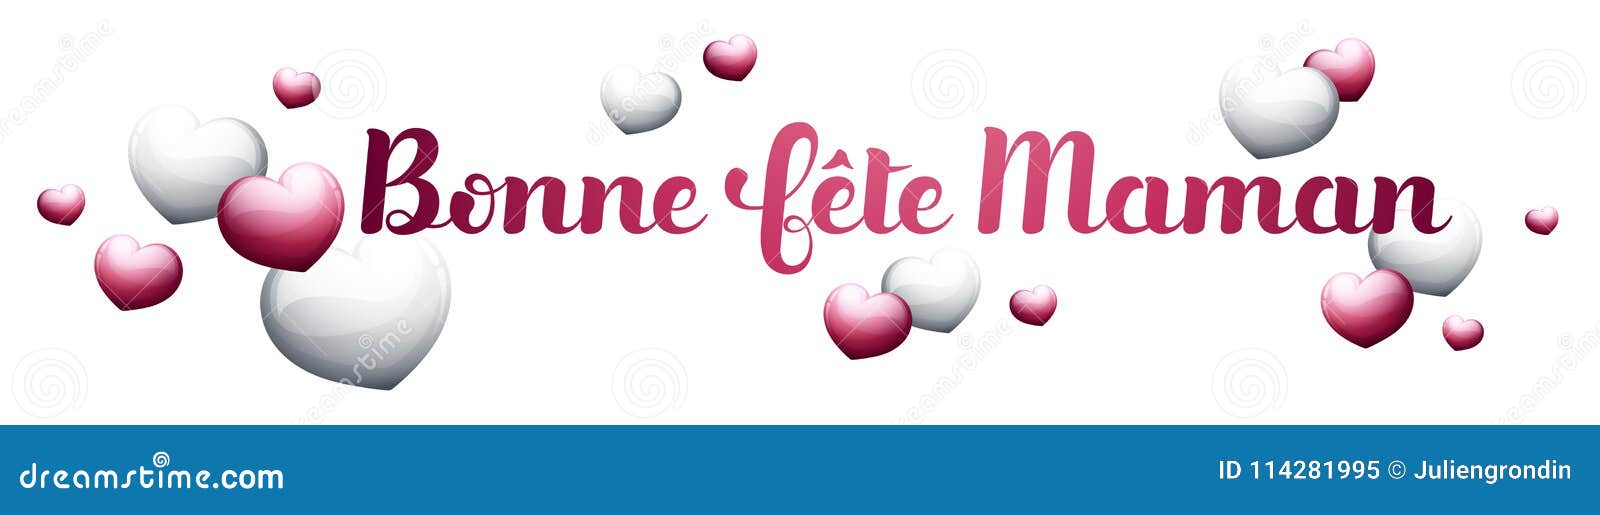 happy motherÃ¢â¬â¢s day in french : bonne fÃÂªte maman